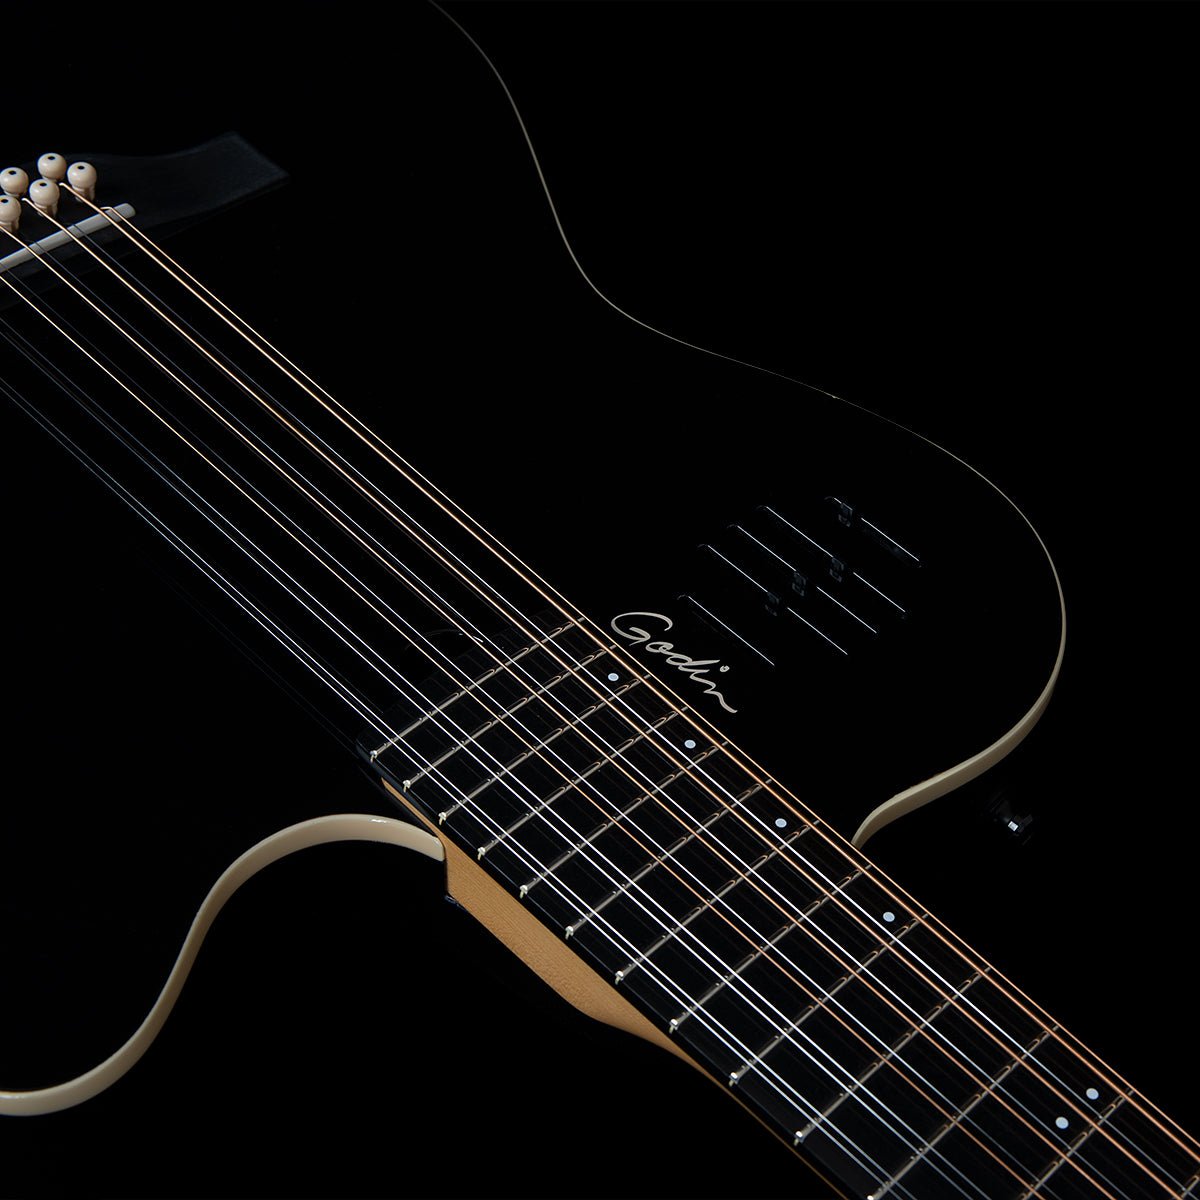 Godin A12 Black HG  Electric Acoustic 12 String Guitar